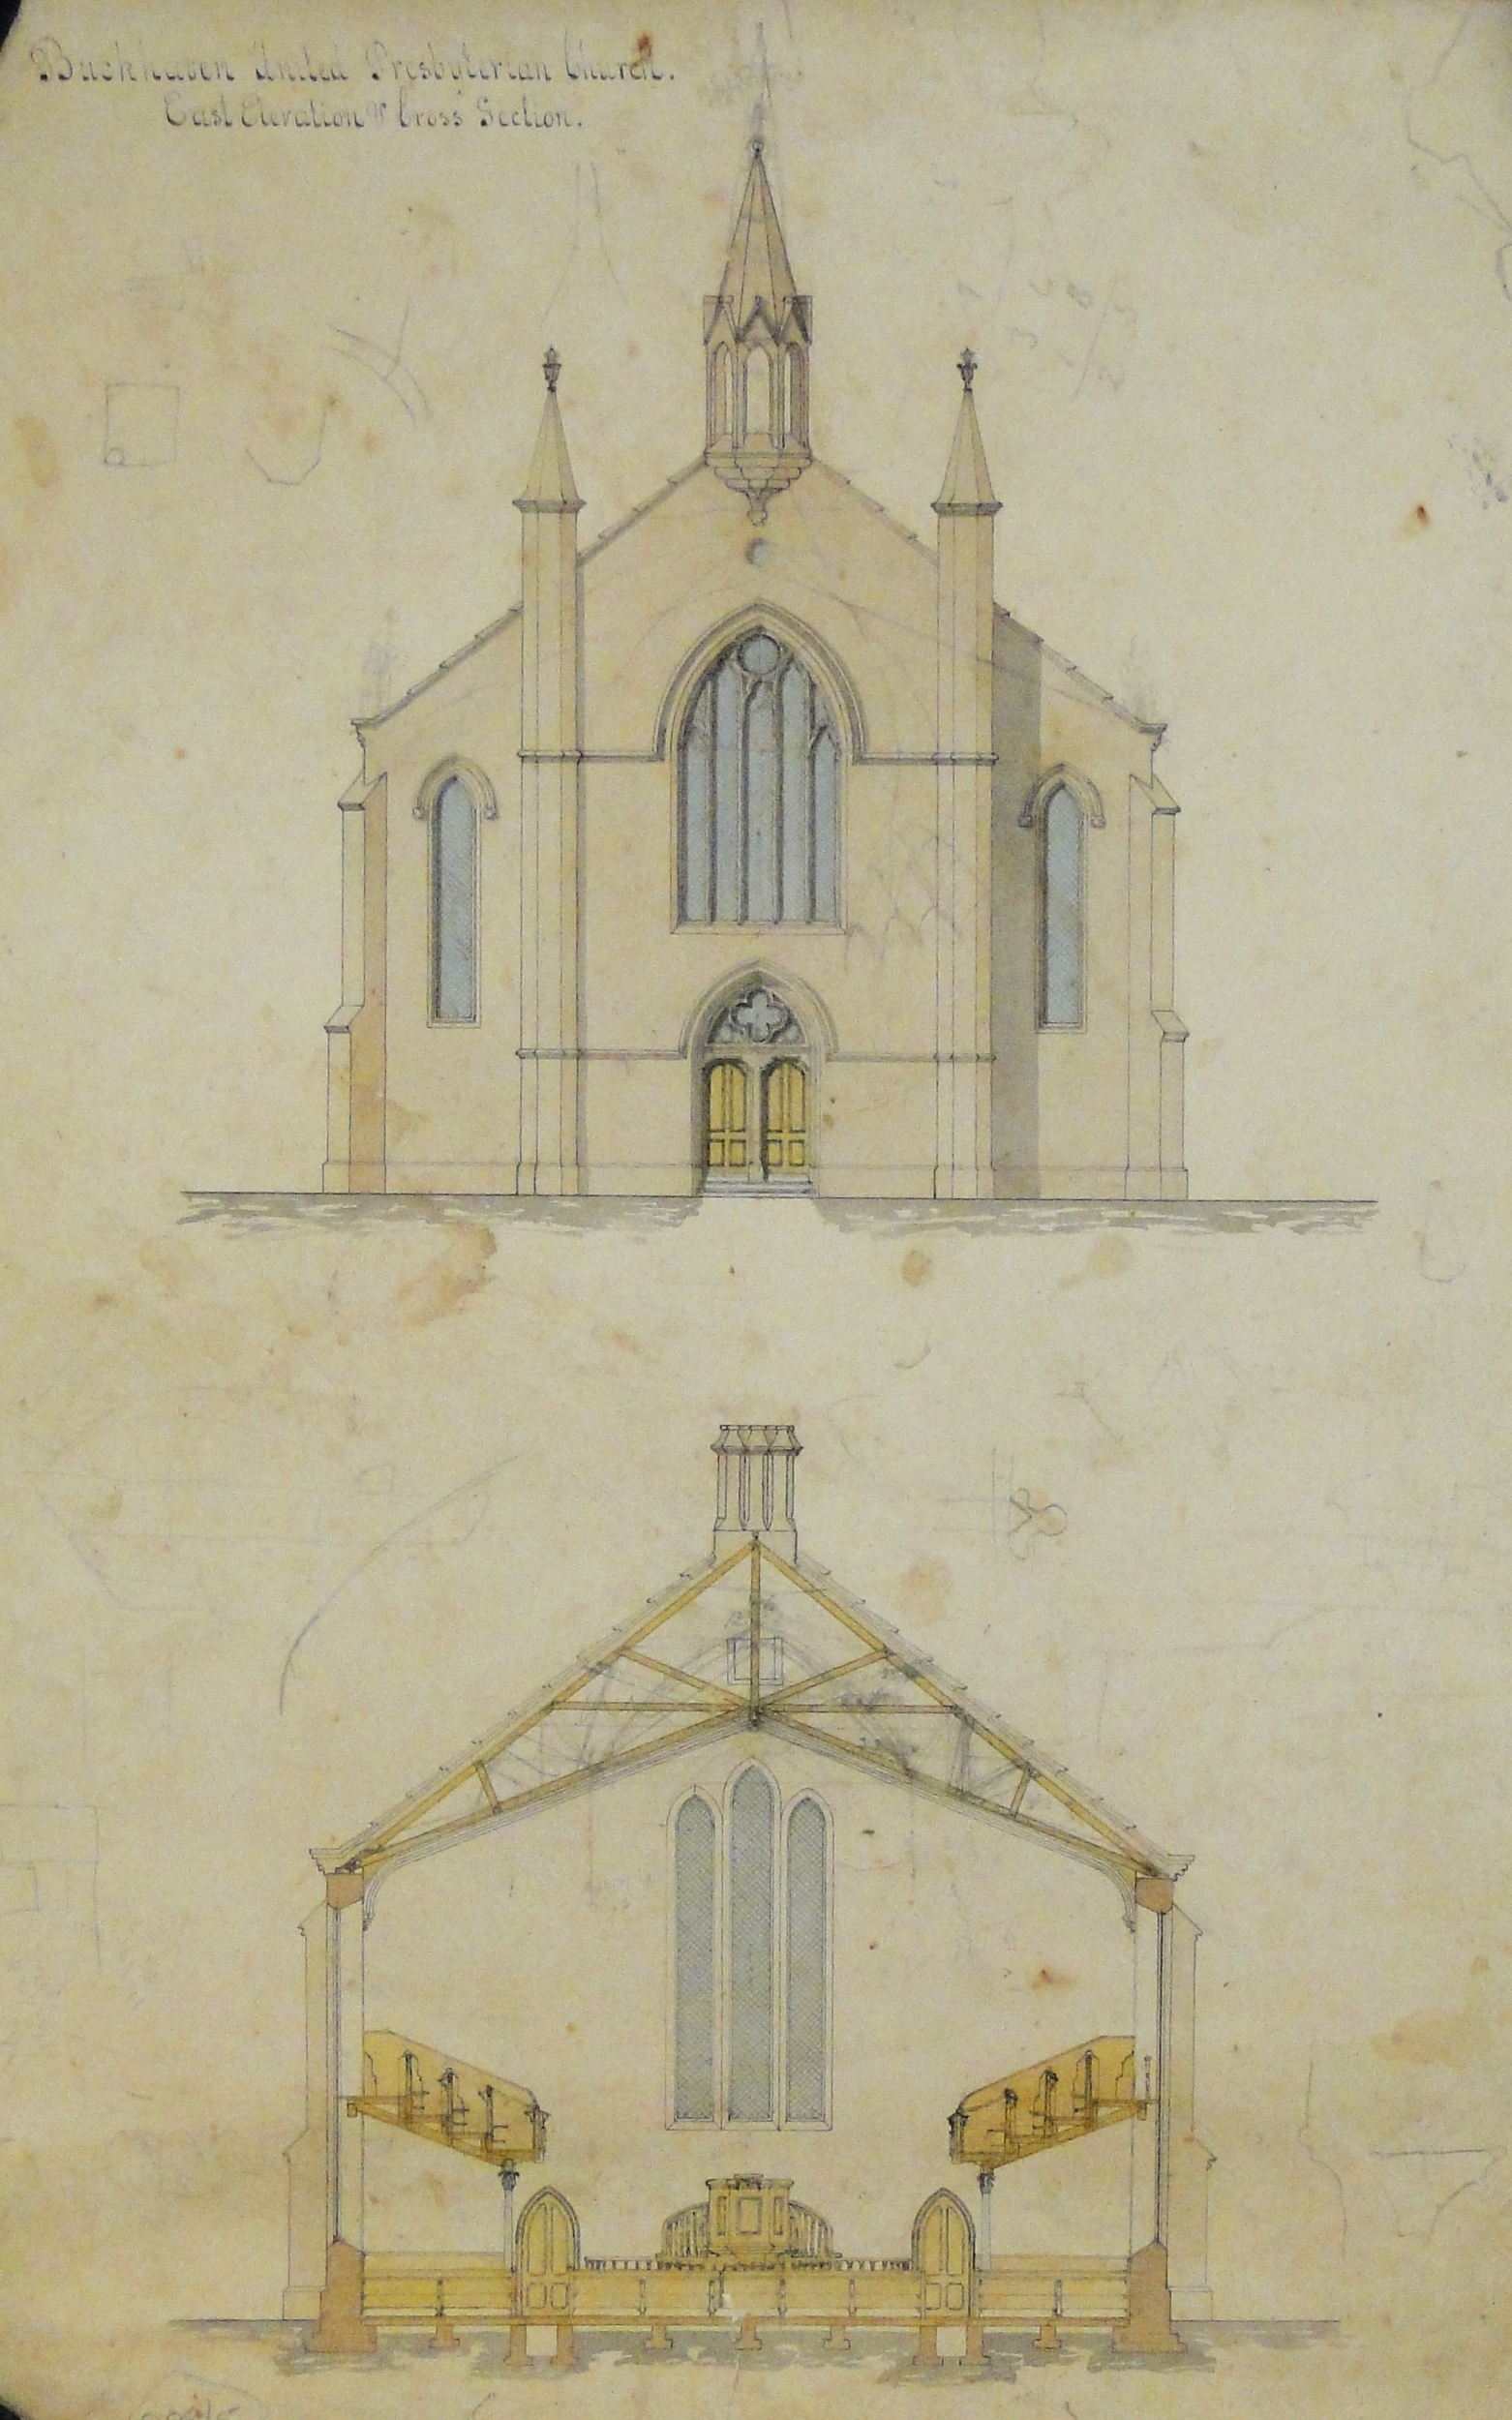 Gillespie and Scott's United Presbyterian Church, Buckhaven, Fife, 1867-68 (St Andrews ms37778b/288)